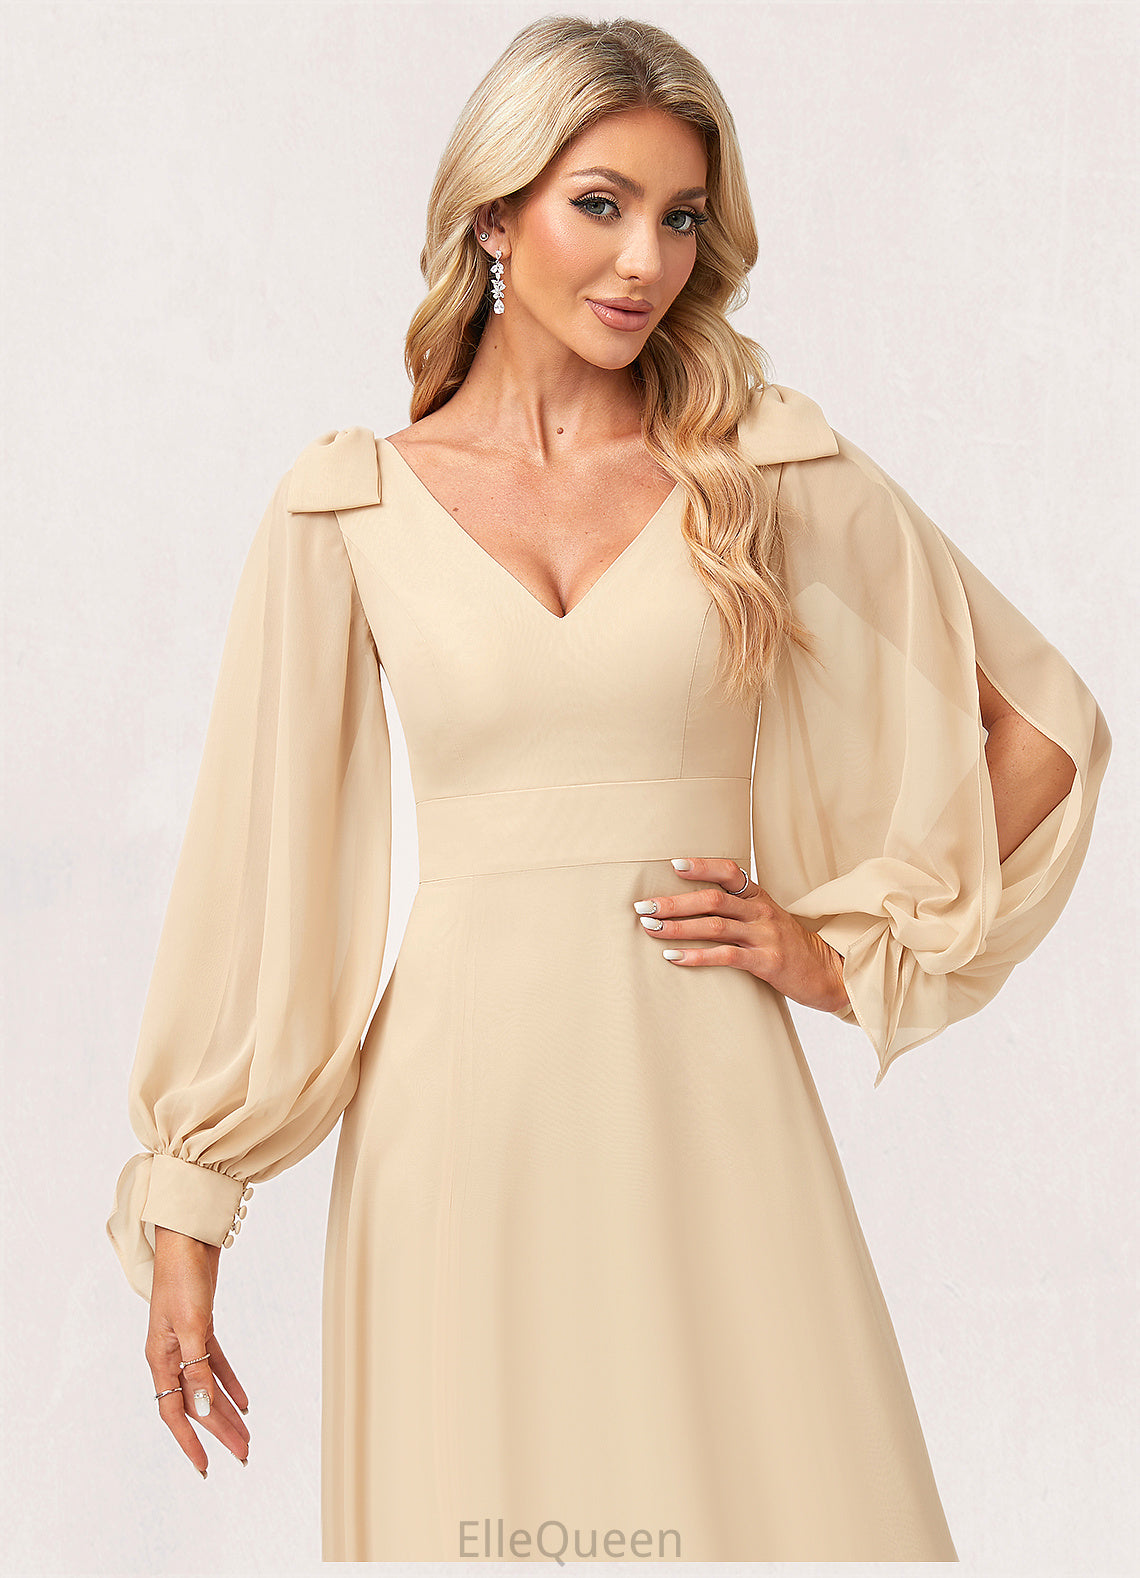 April A-line V-Neck Floor-Length Chiffon Bridesmaid Dress With Bow DGP0022613